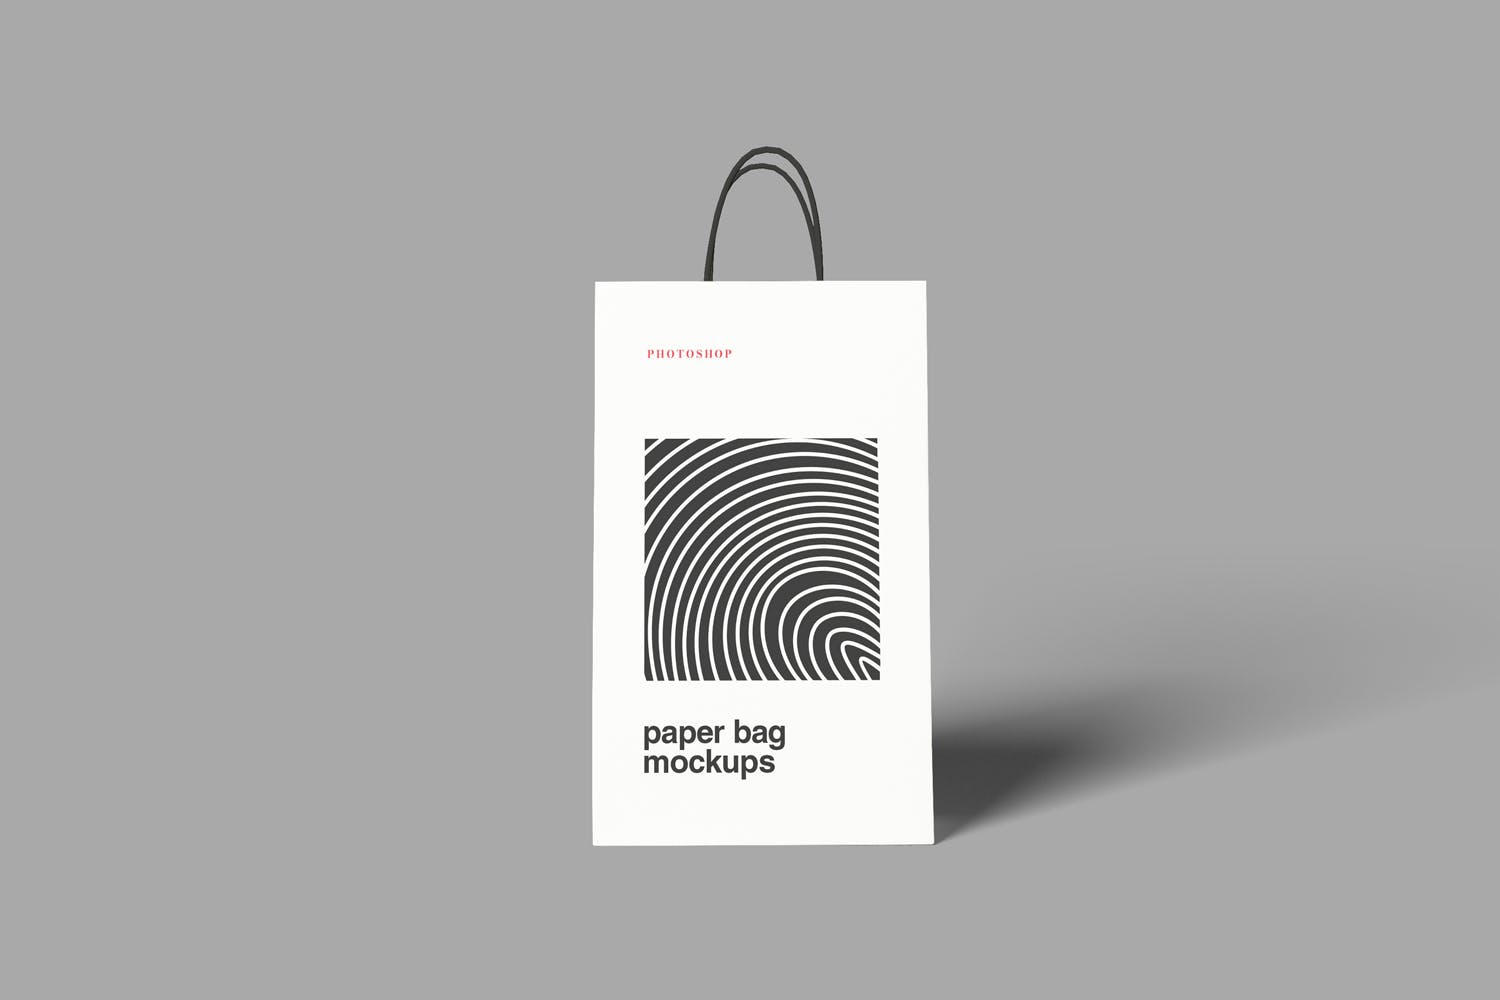 精品购物纸袋设计效果图样机 Paper Bag Mockups插图(1)